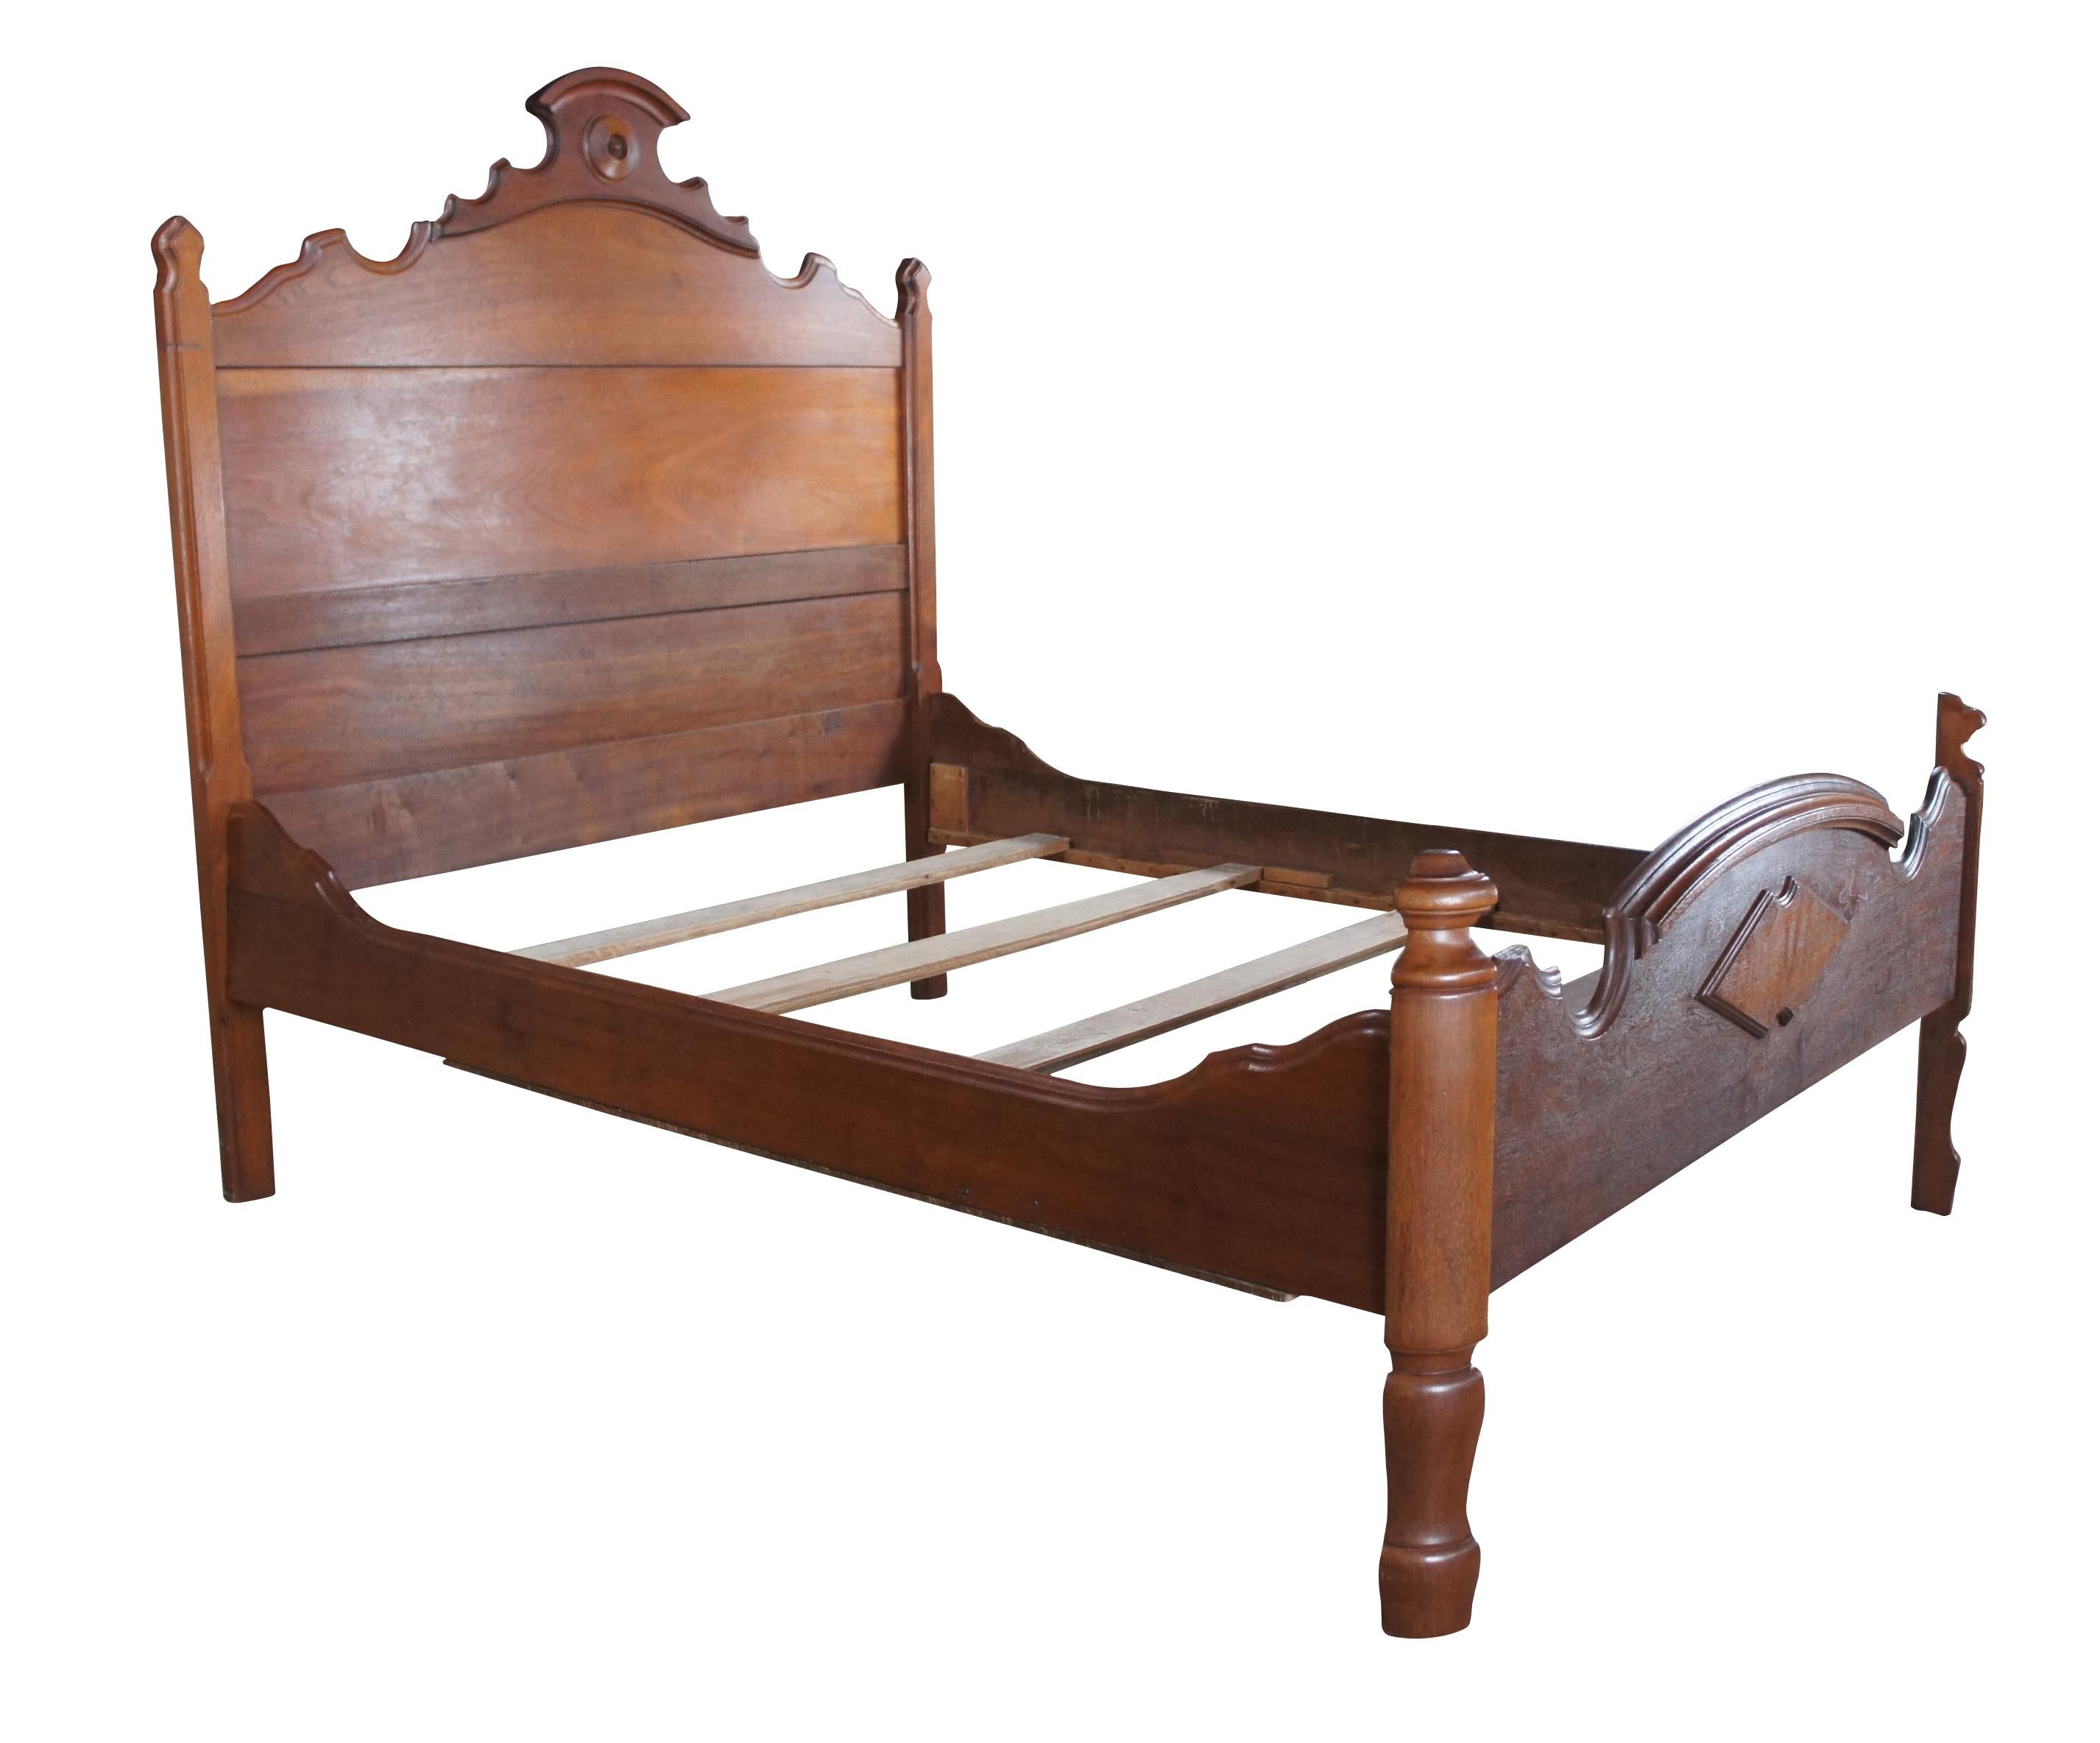 19th century bed